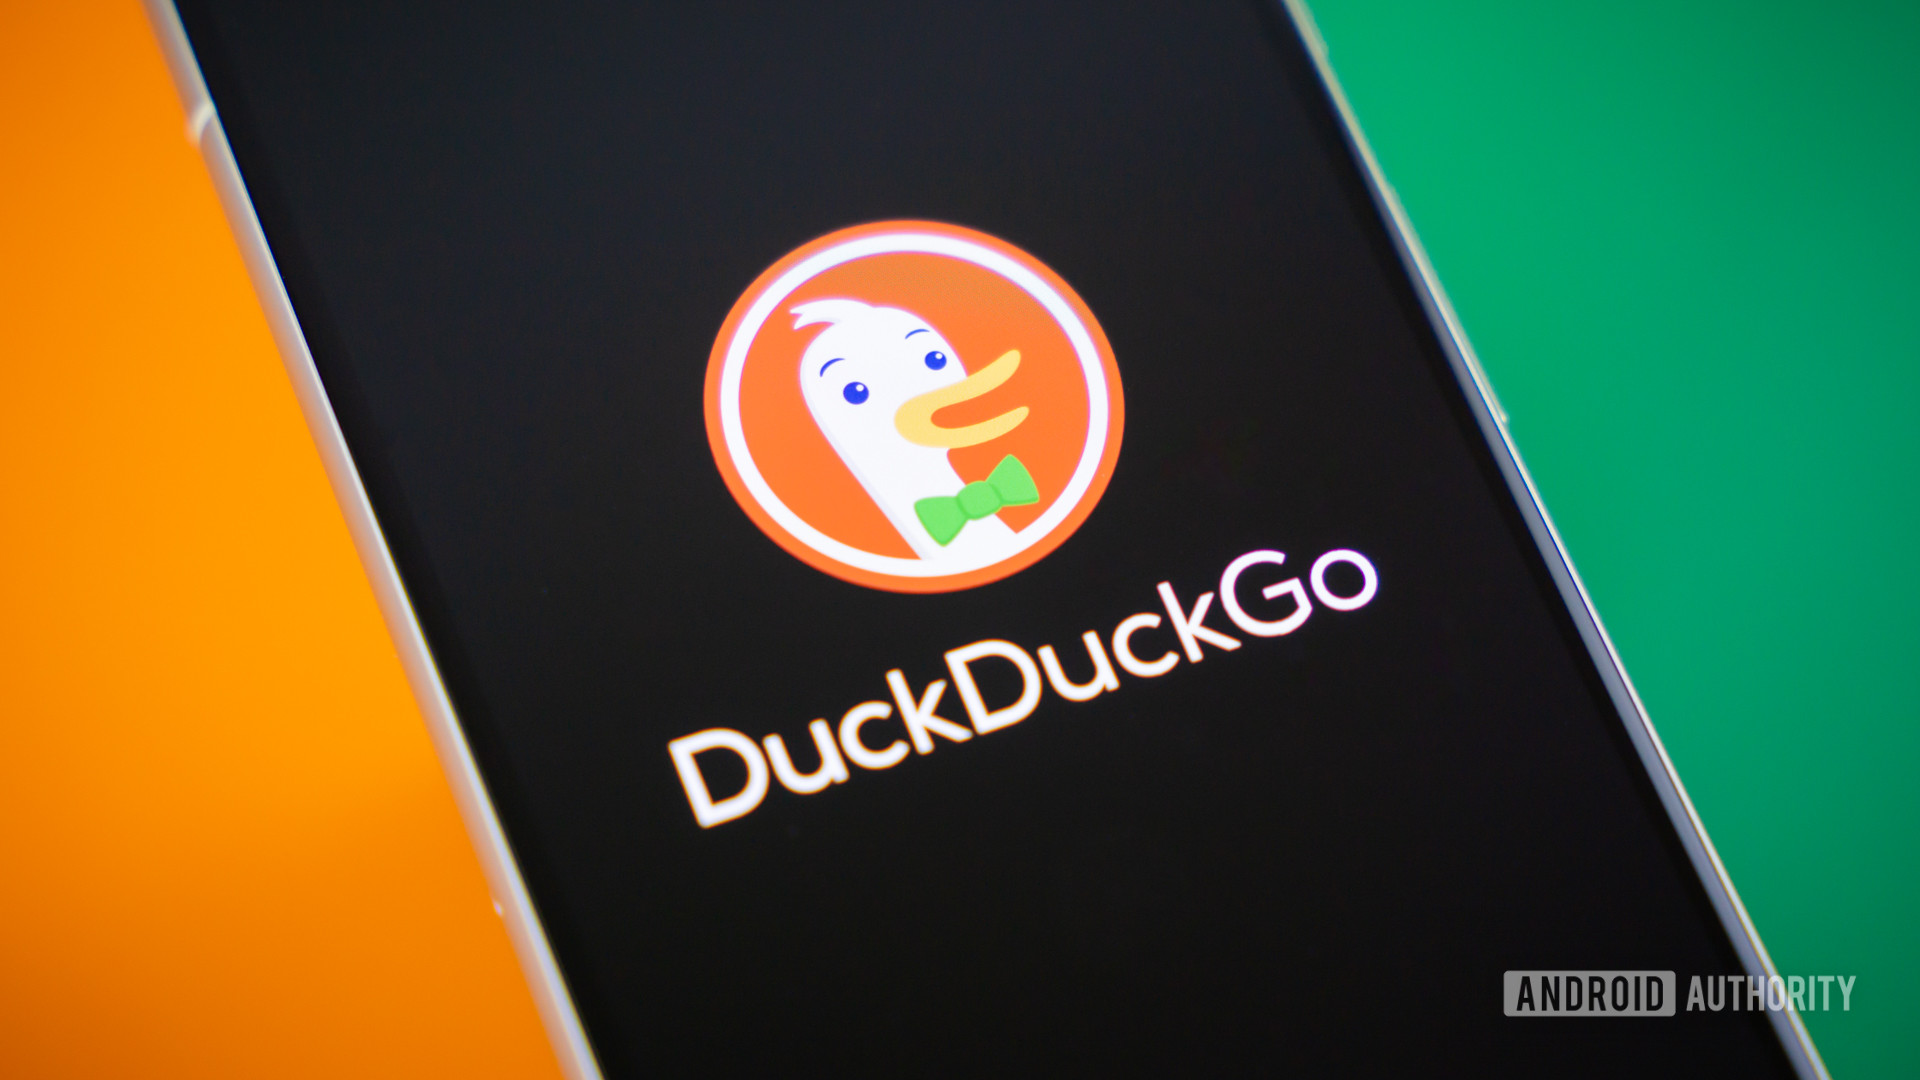 Stock photo of DuckDuckGo logo on smartphone 3